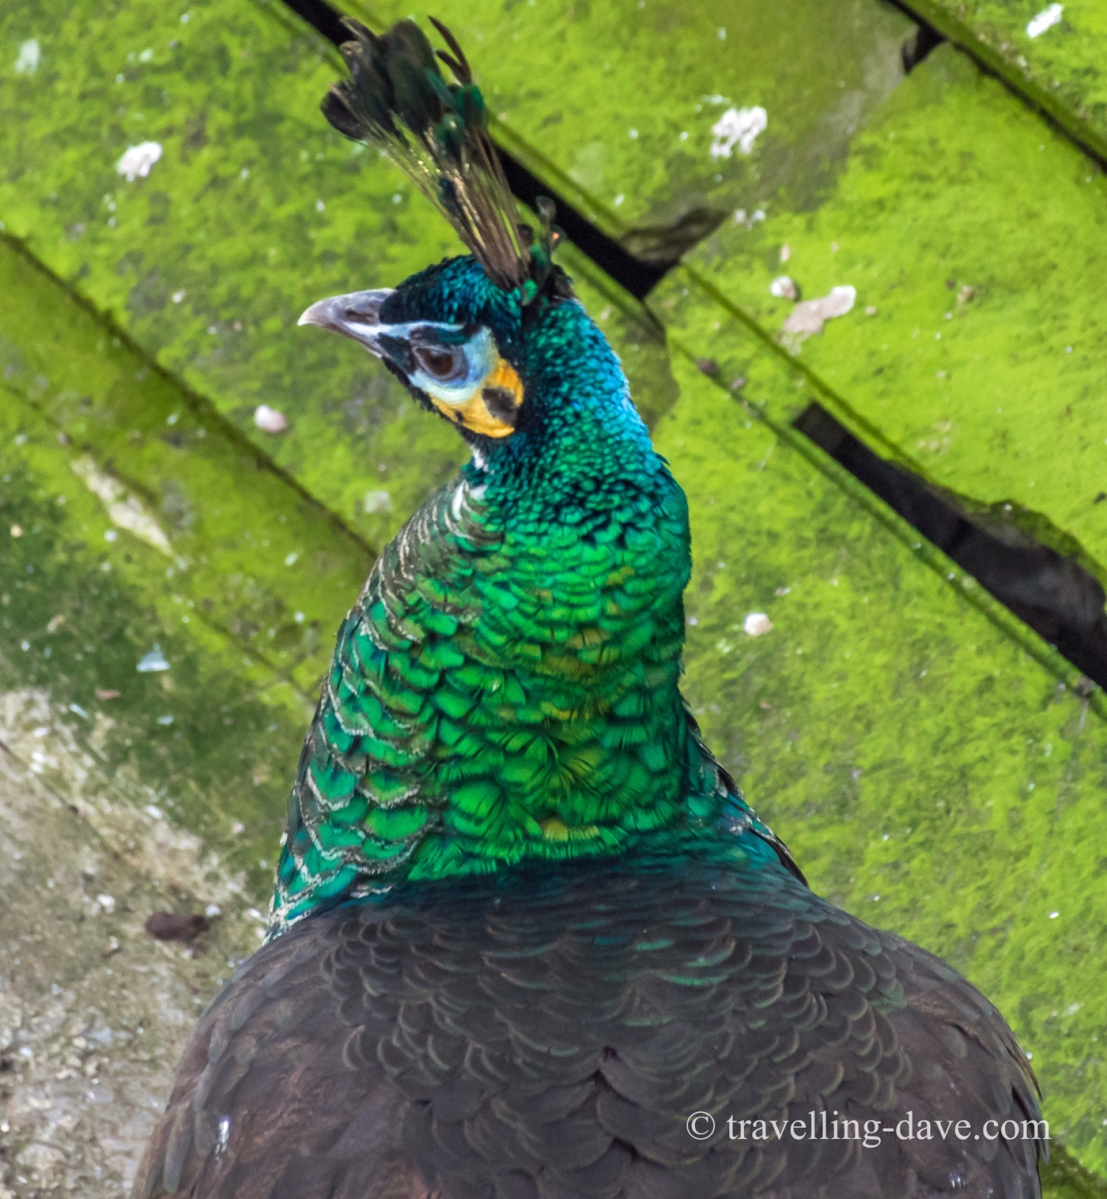 One of London Zoo peacocks